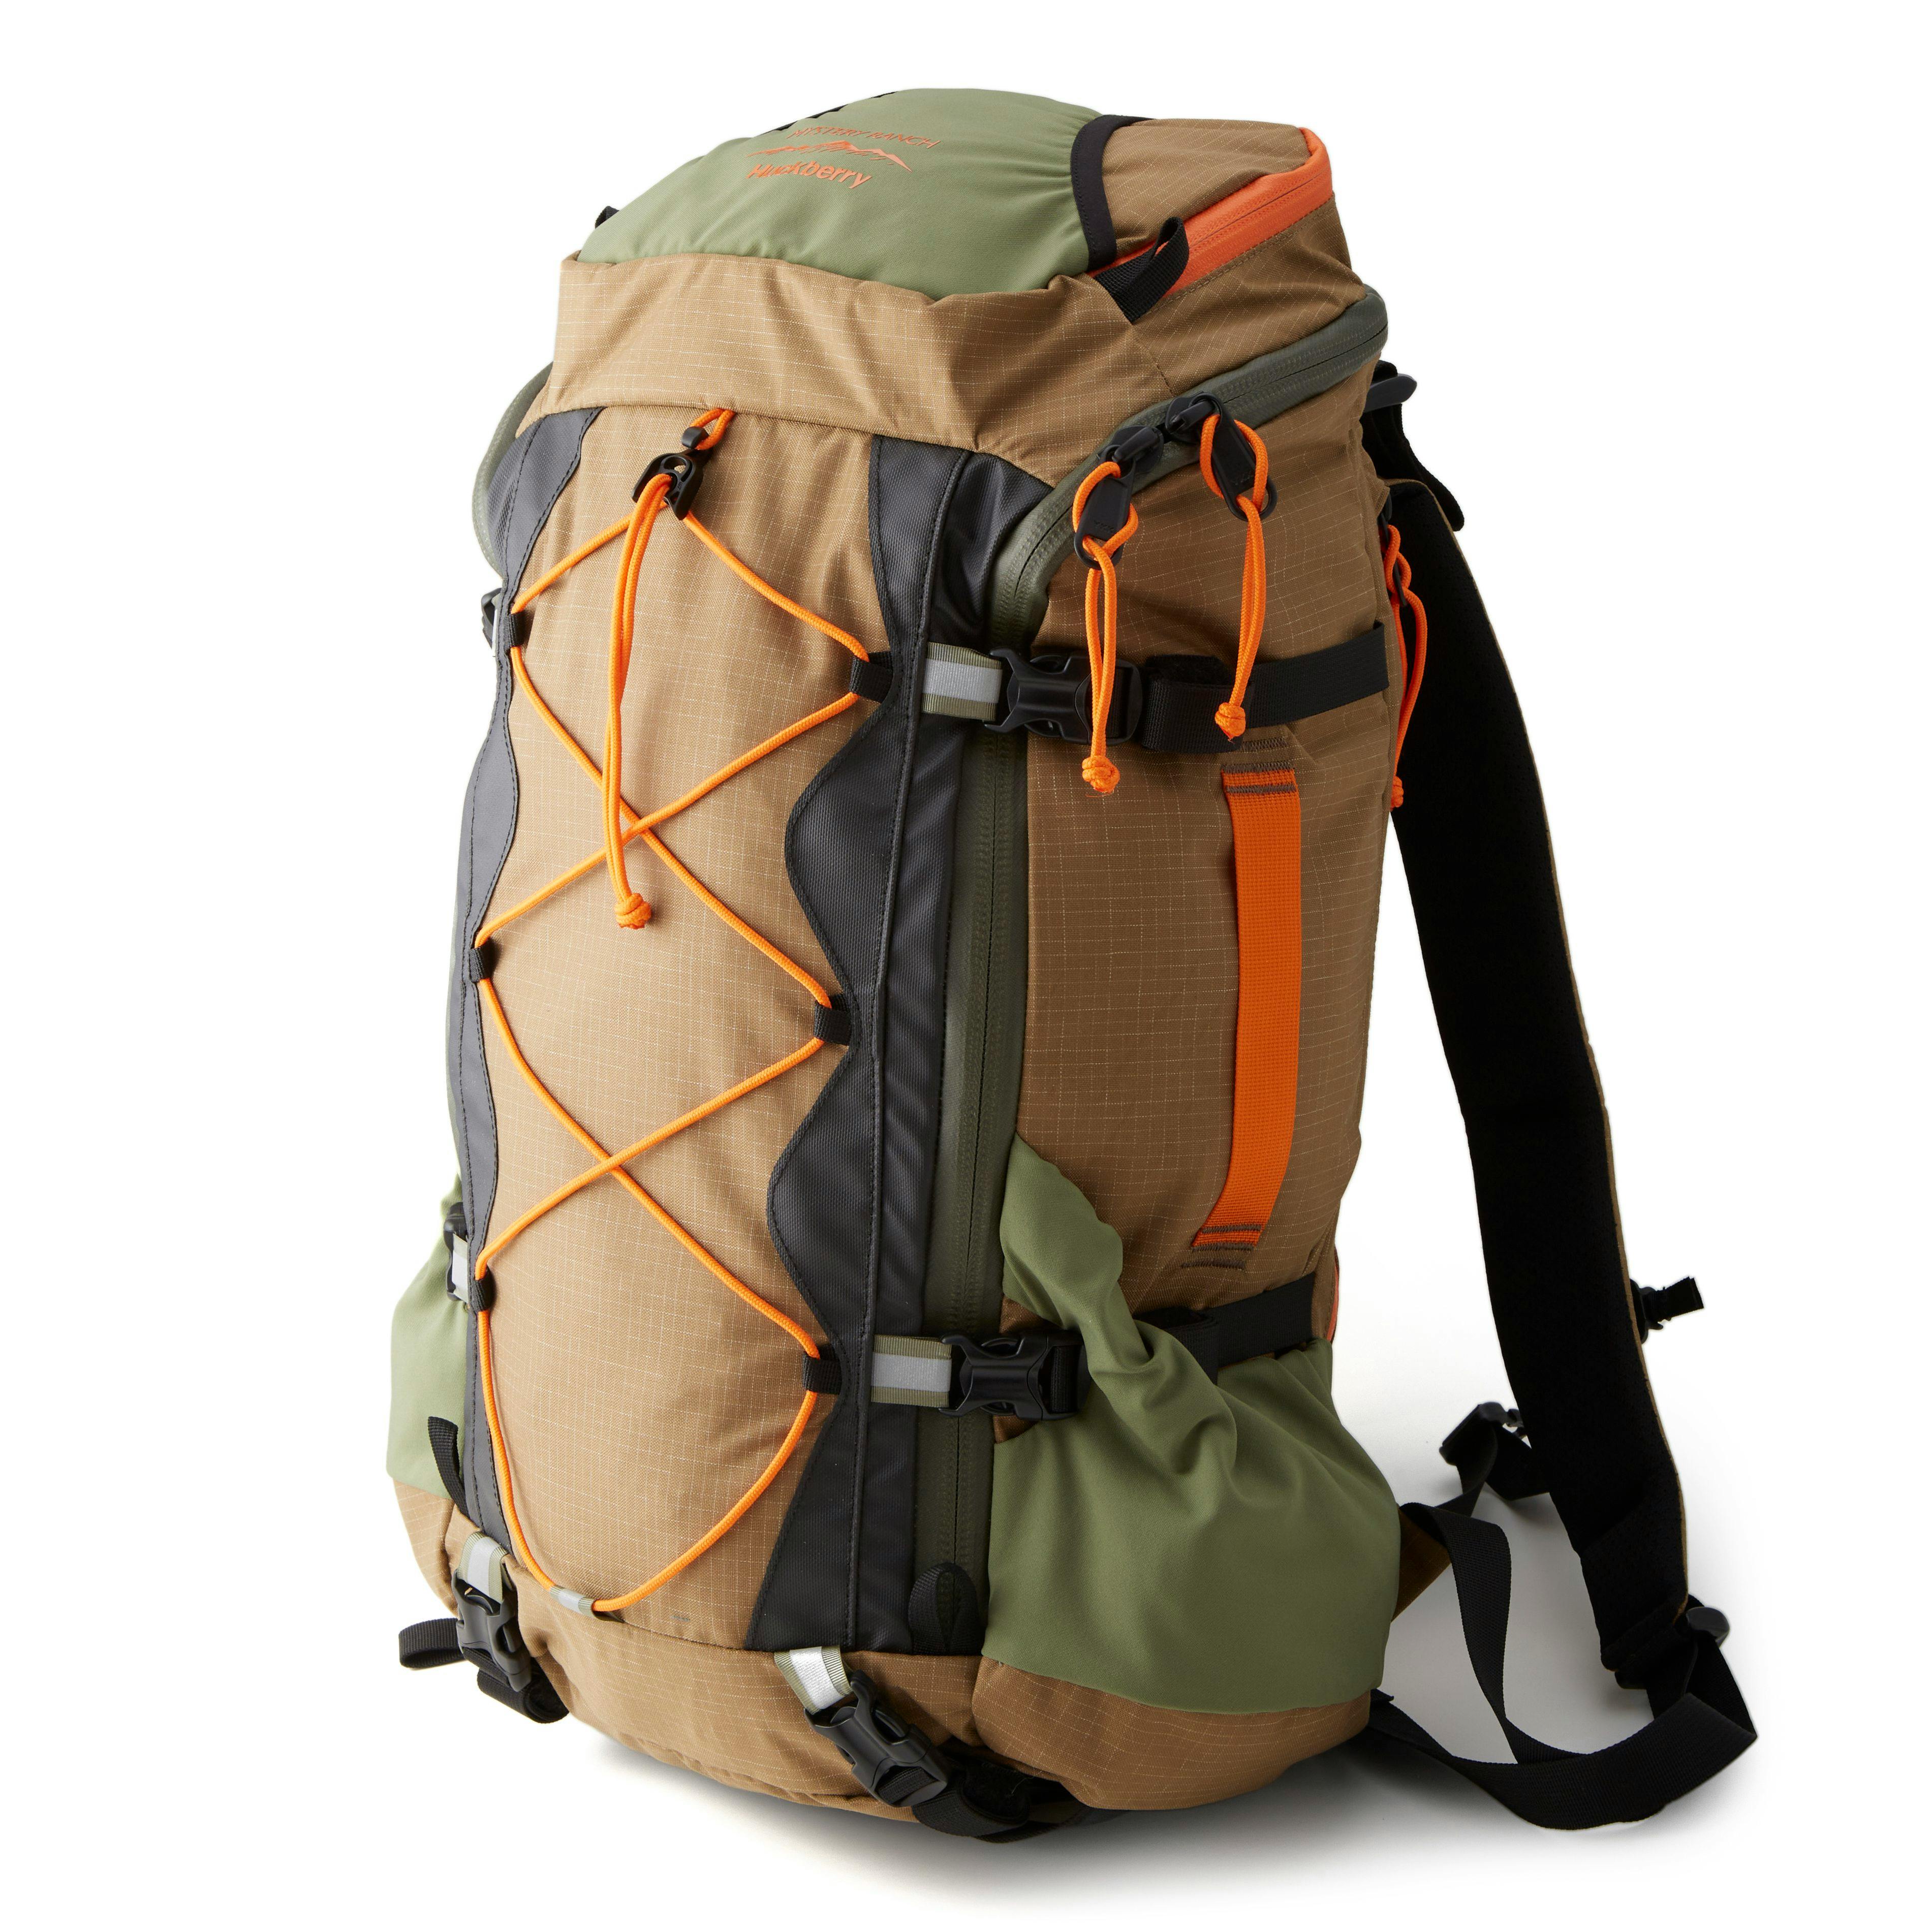 Tough Terrain Backpack